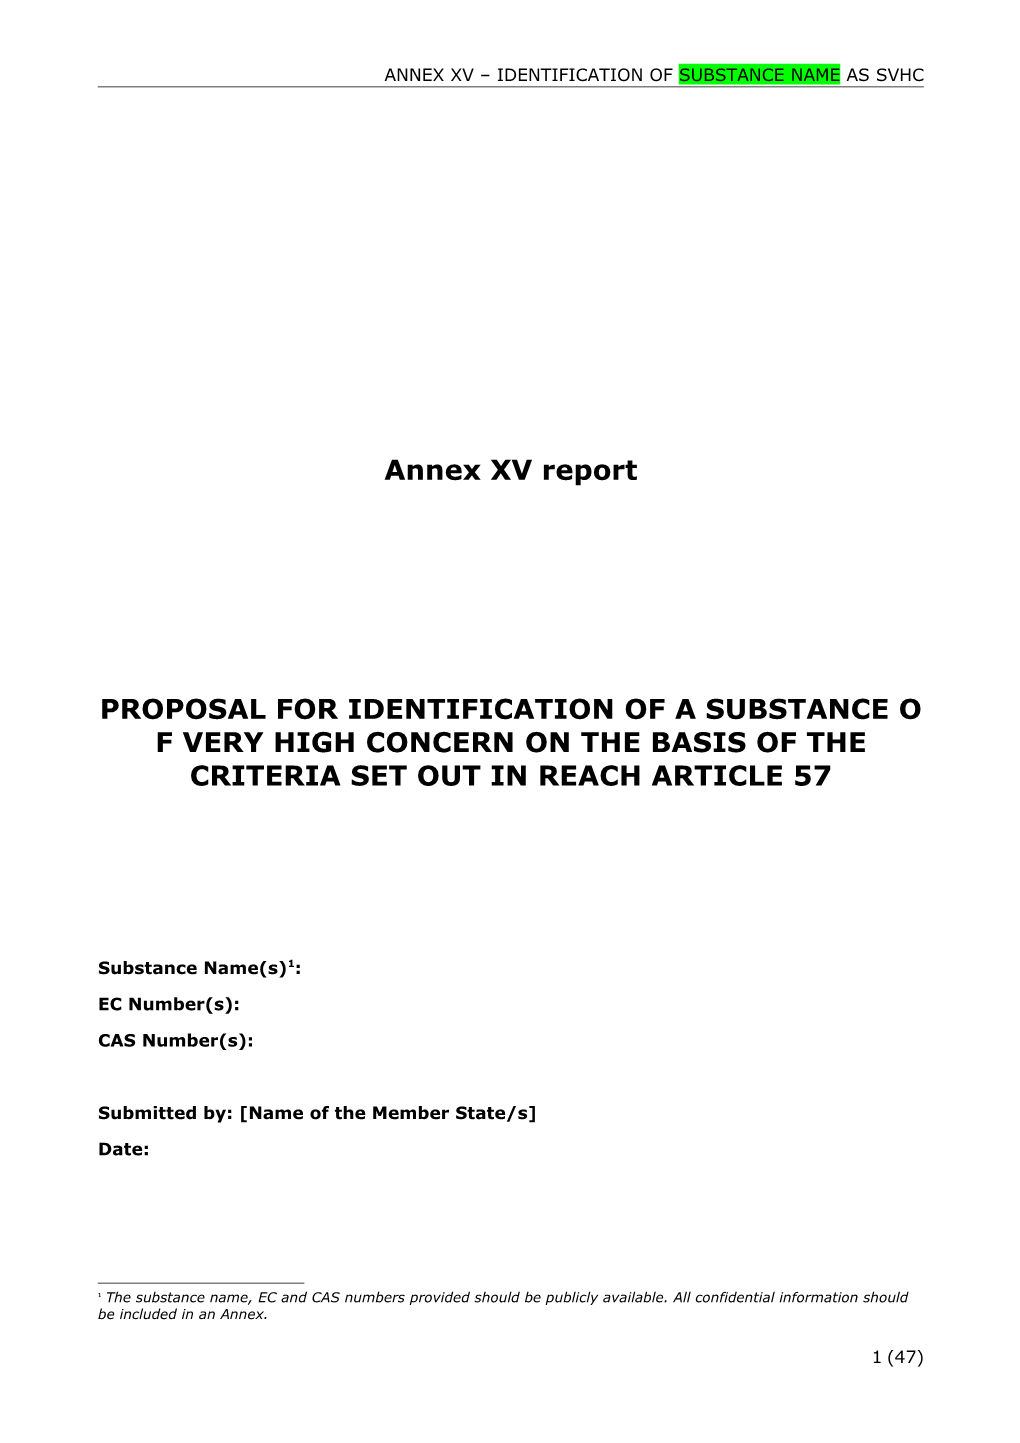 Annex XV Report